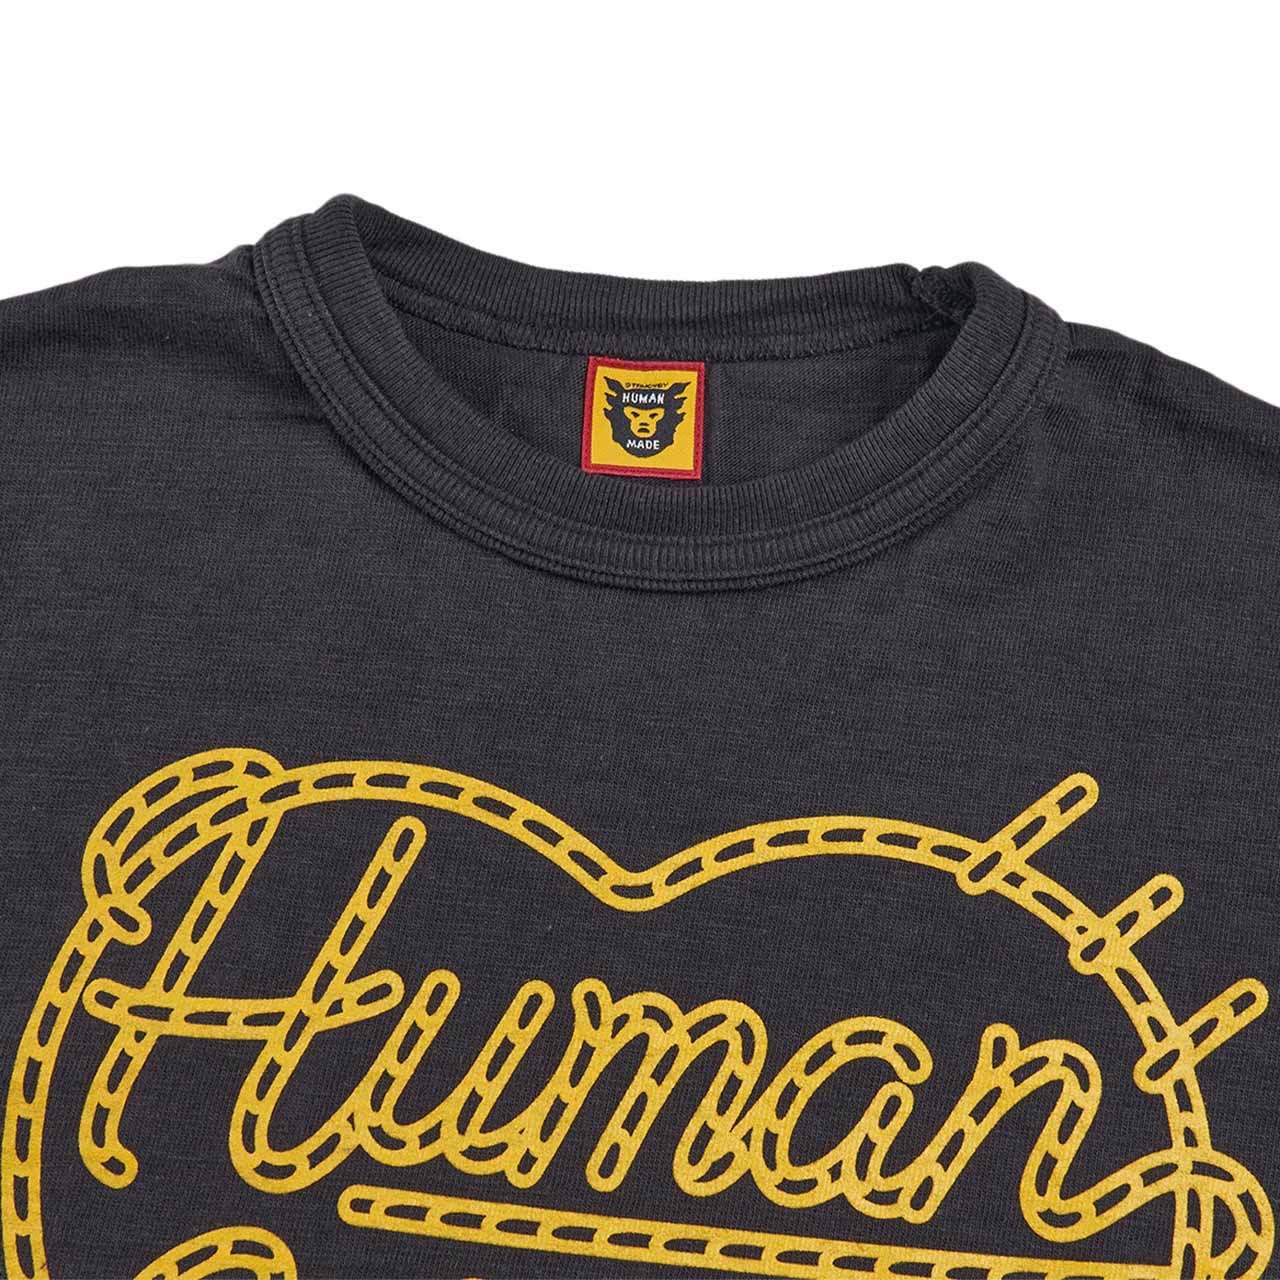 human made graphic t-shirt (schwarz)